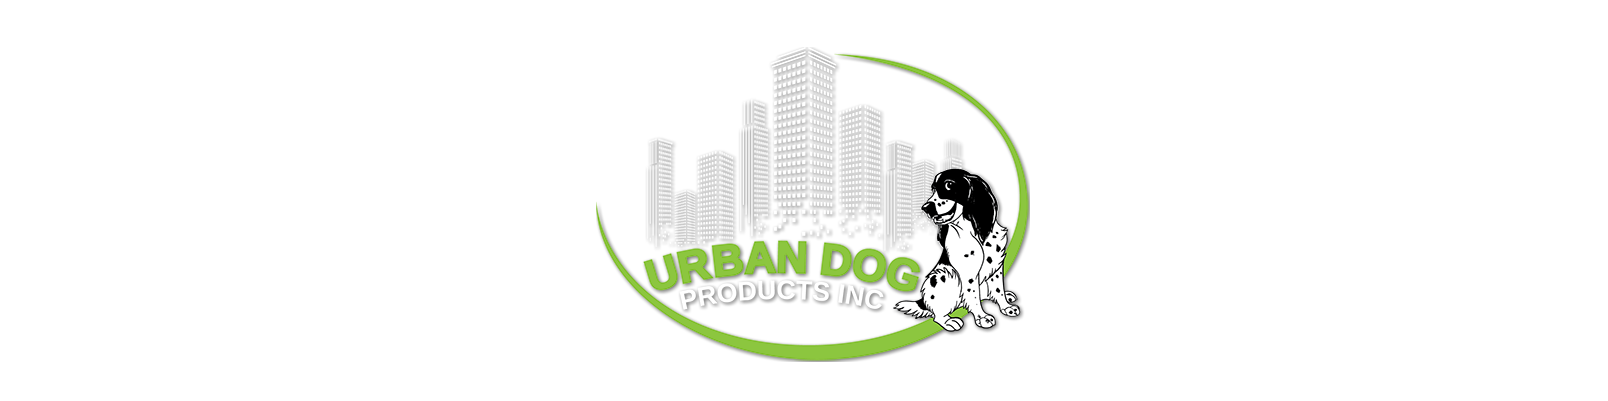 Urban Dog Products